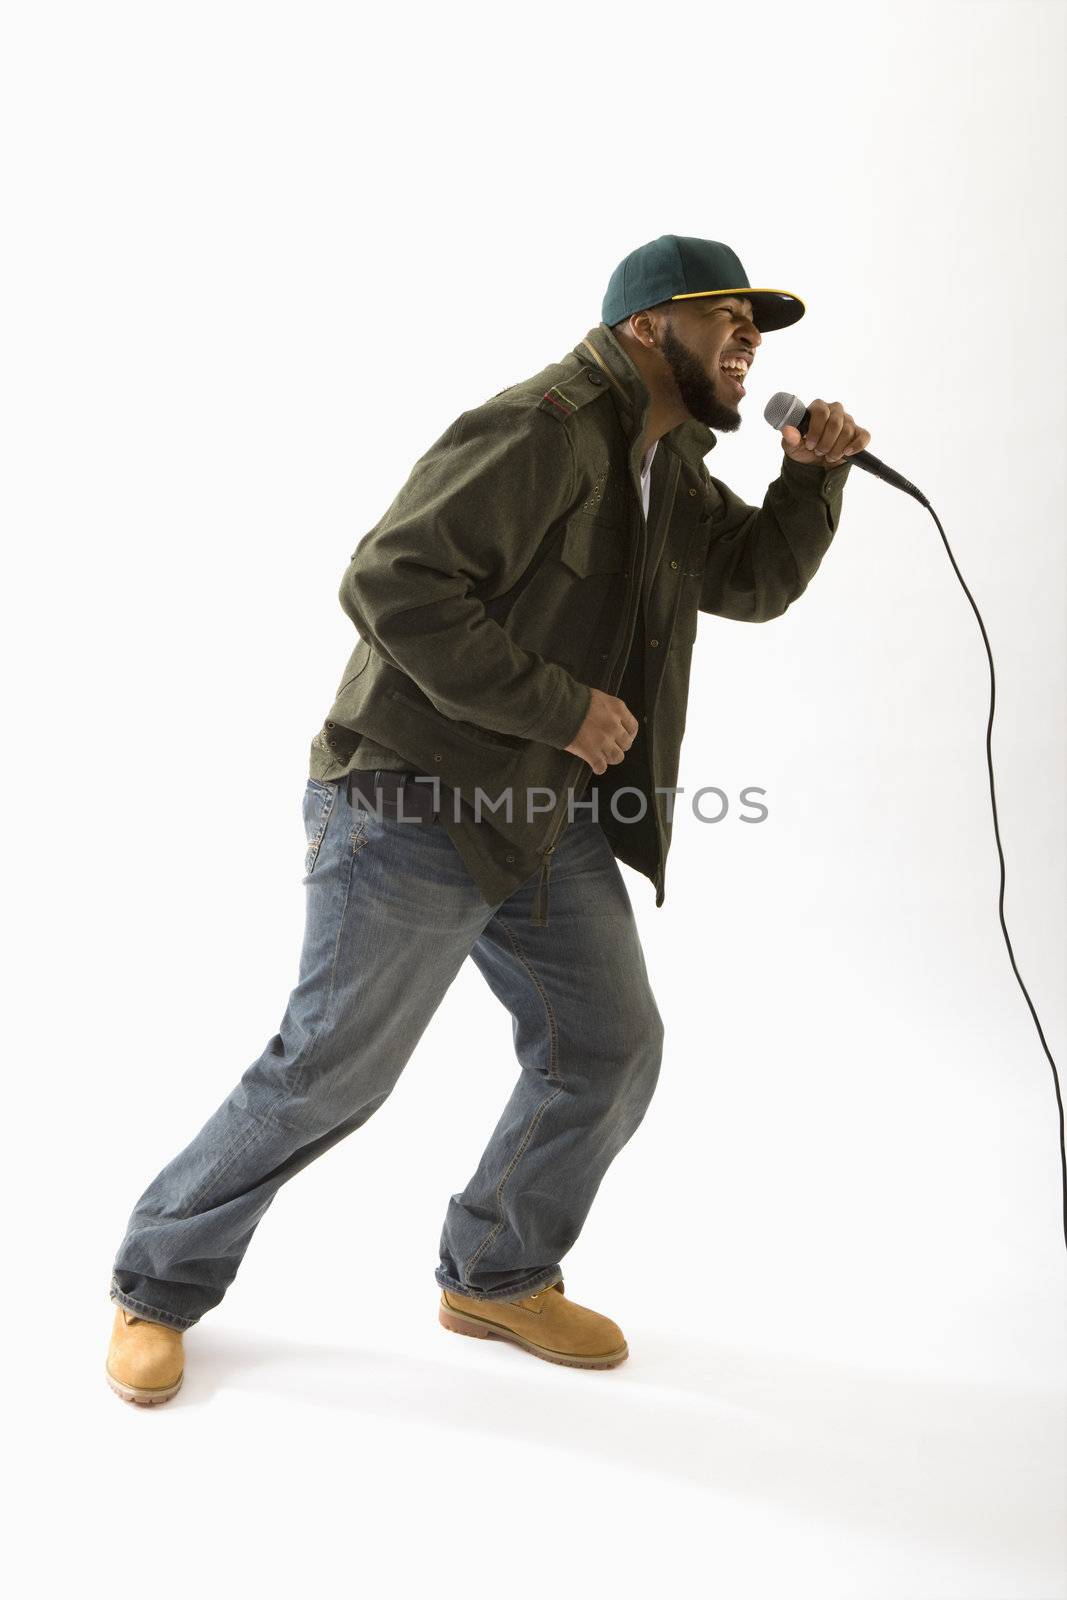 Man singing into microphone by edbockstock